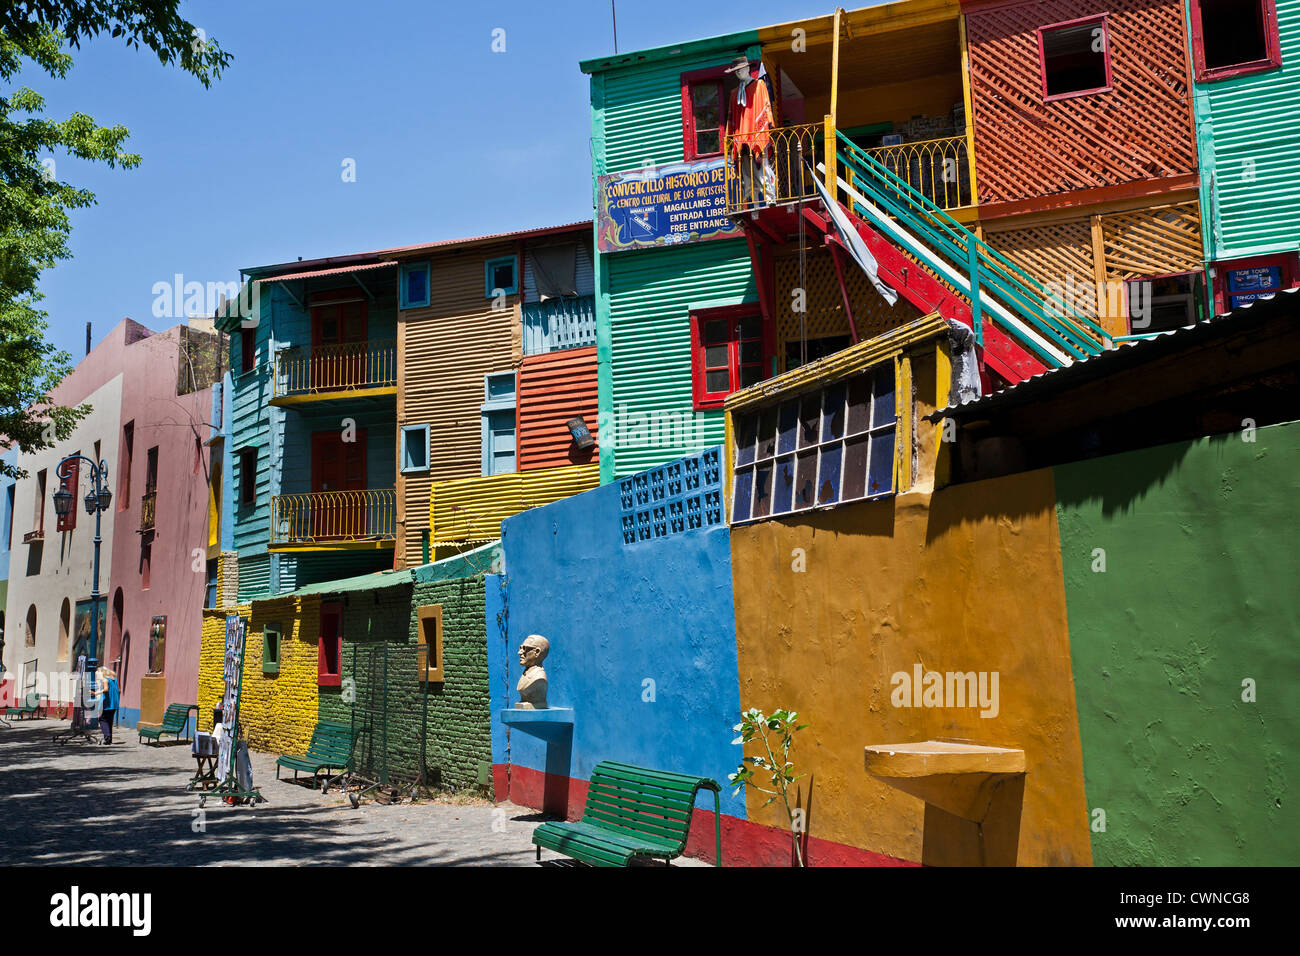 Colorful houses on Caminito area in La boca. Buenos Aires, Argentina Stock Photo